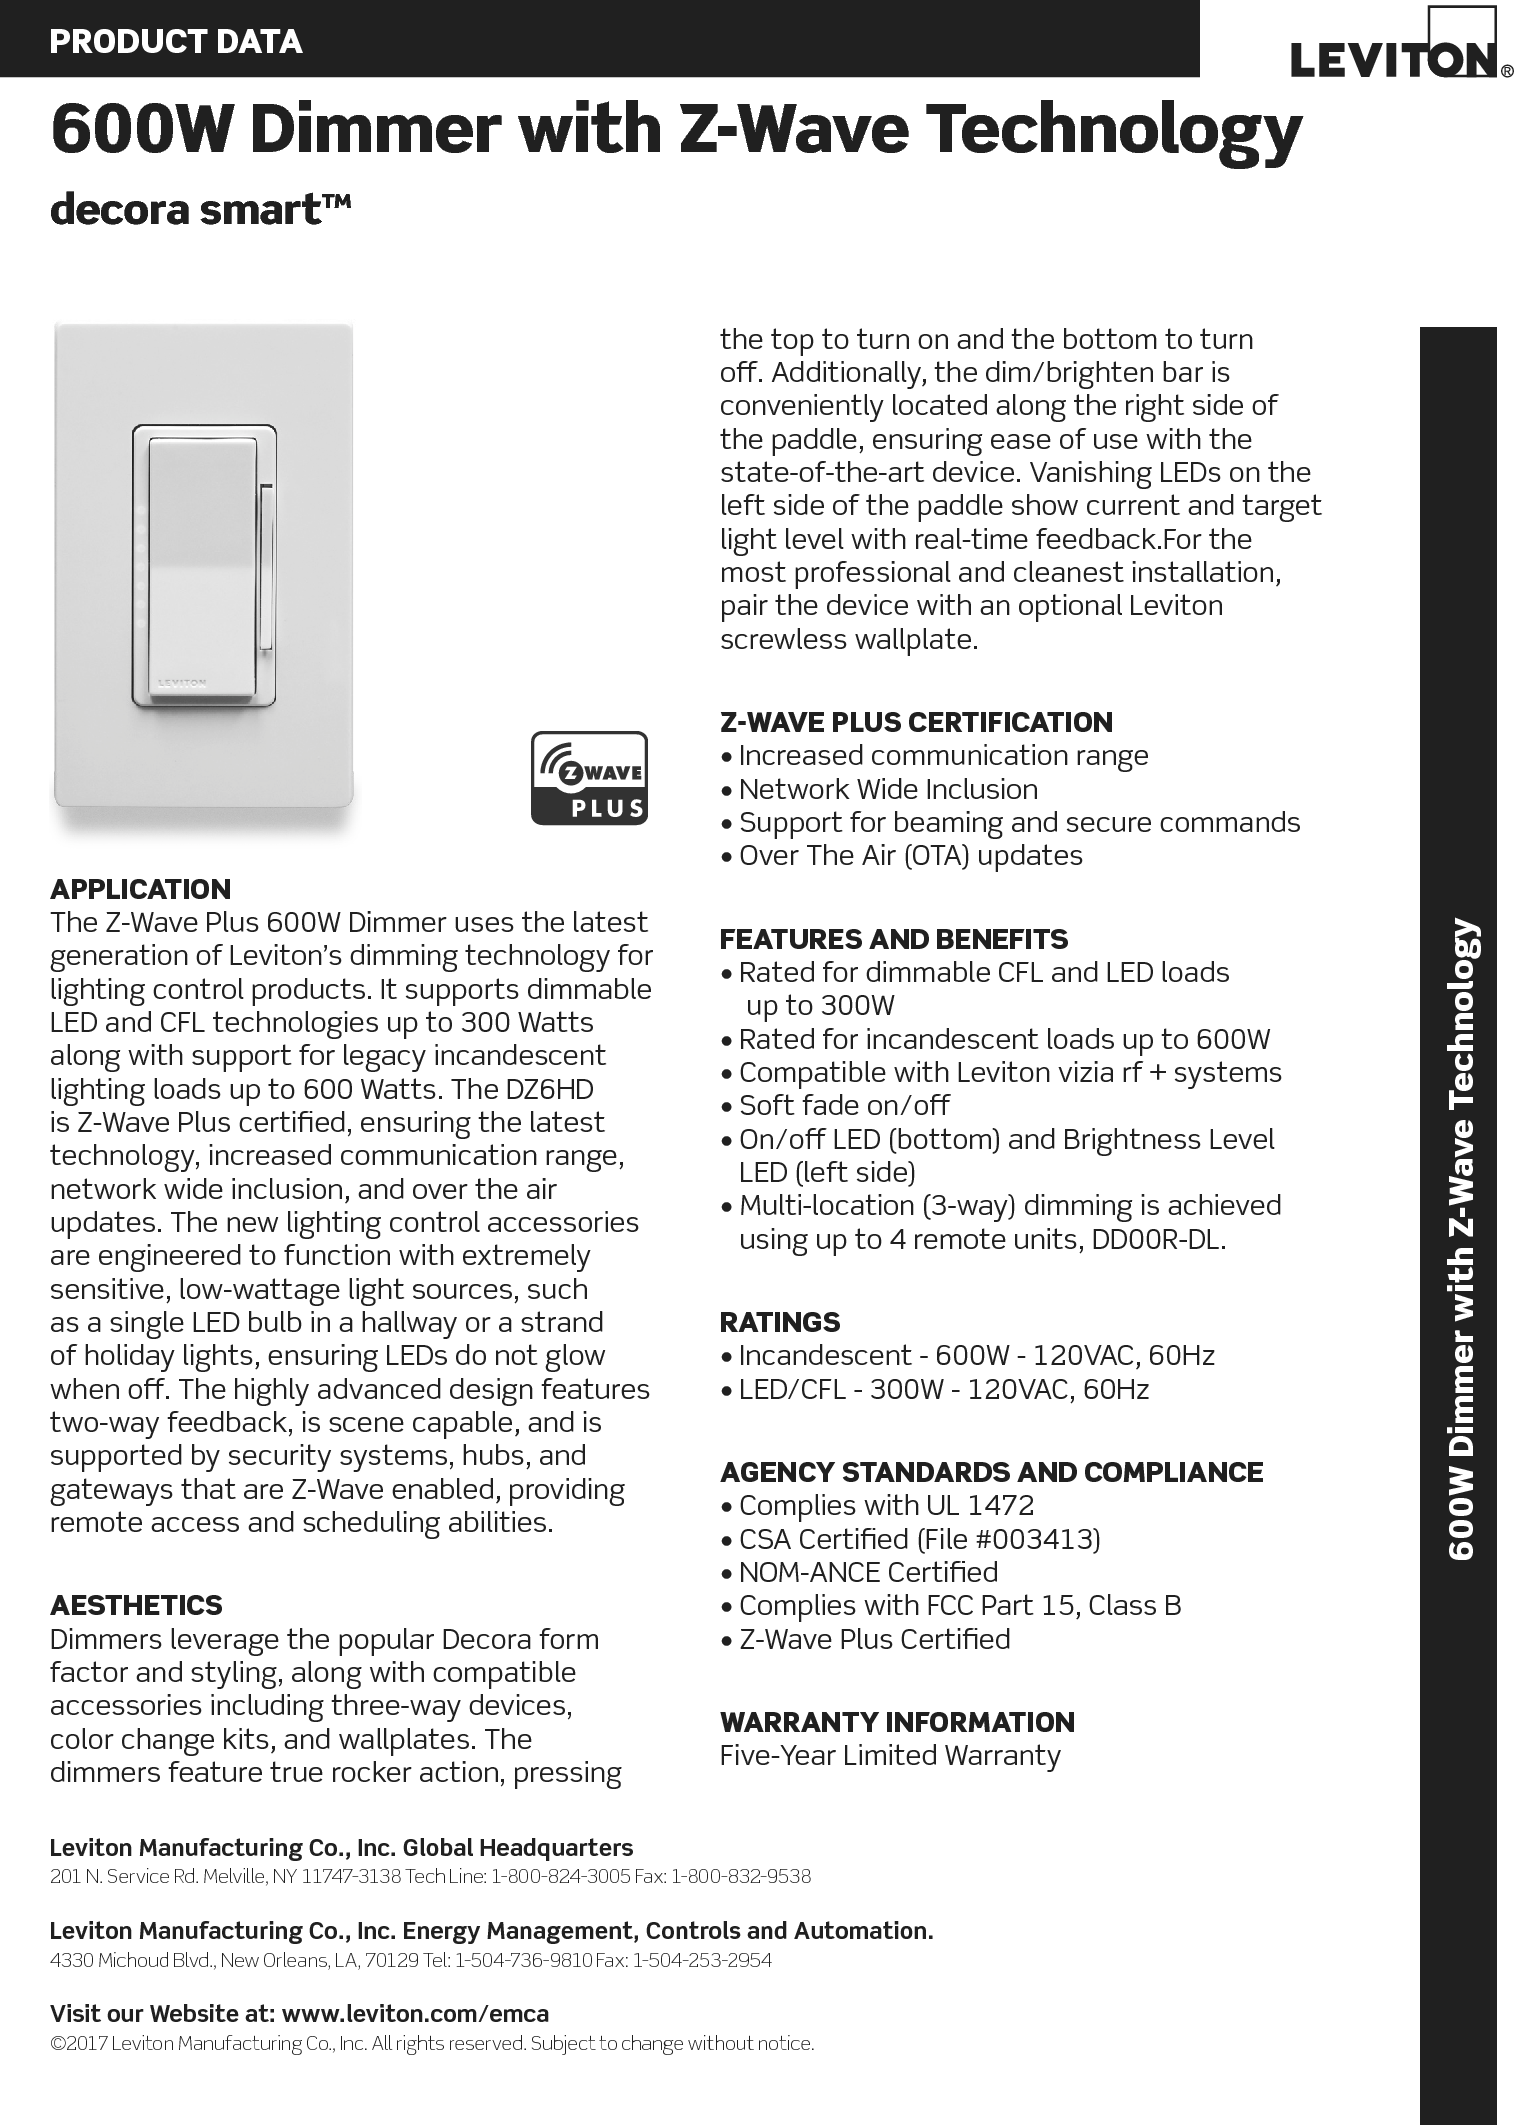 Page 1 of 2 - Z-Wave Dz6Hd Tsht Bw V1P9 User Manual